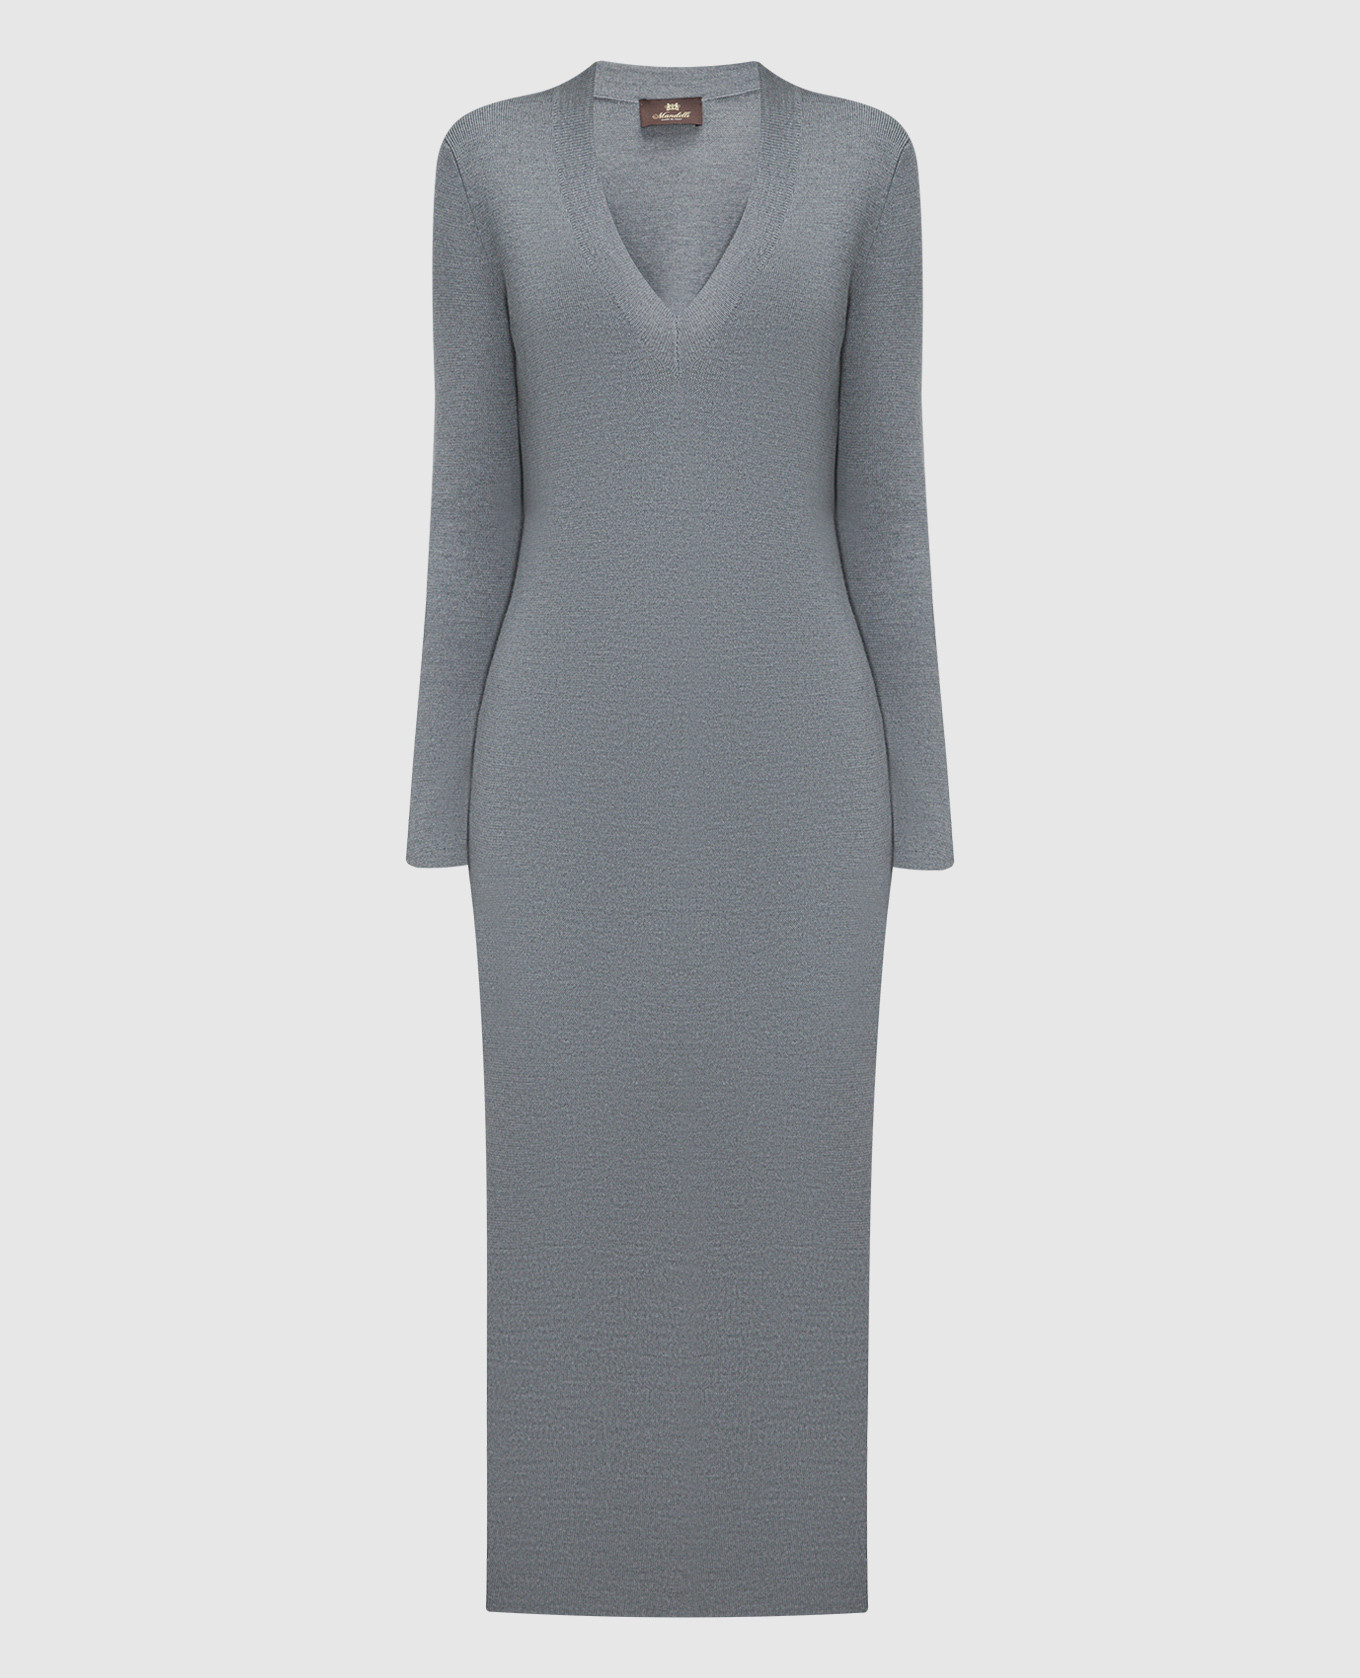 Gray midi dress made of wool